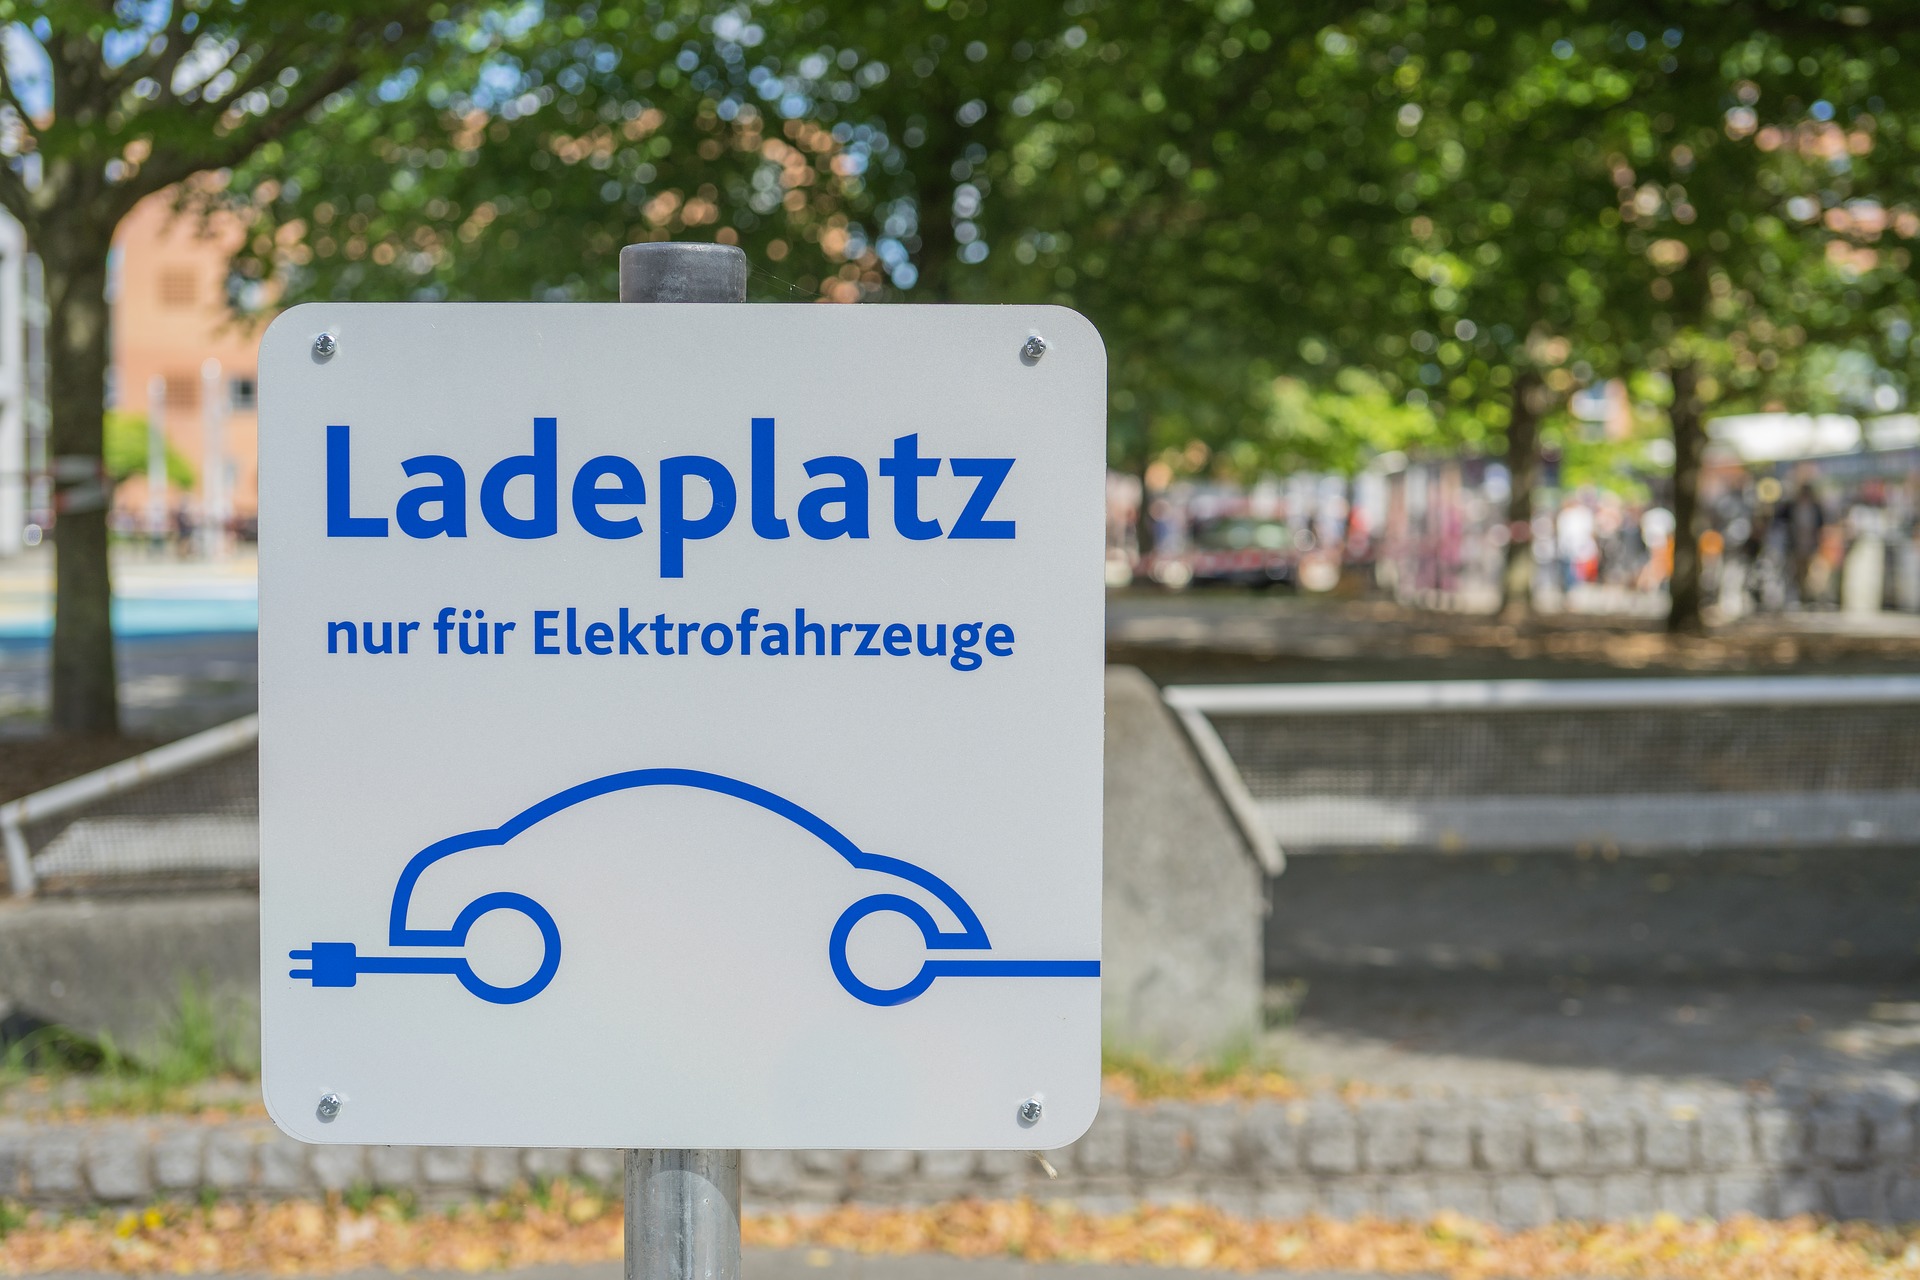 Electromobility Concept for the City of Frankfurt (Oder)